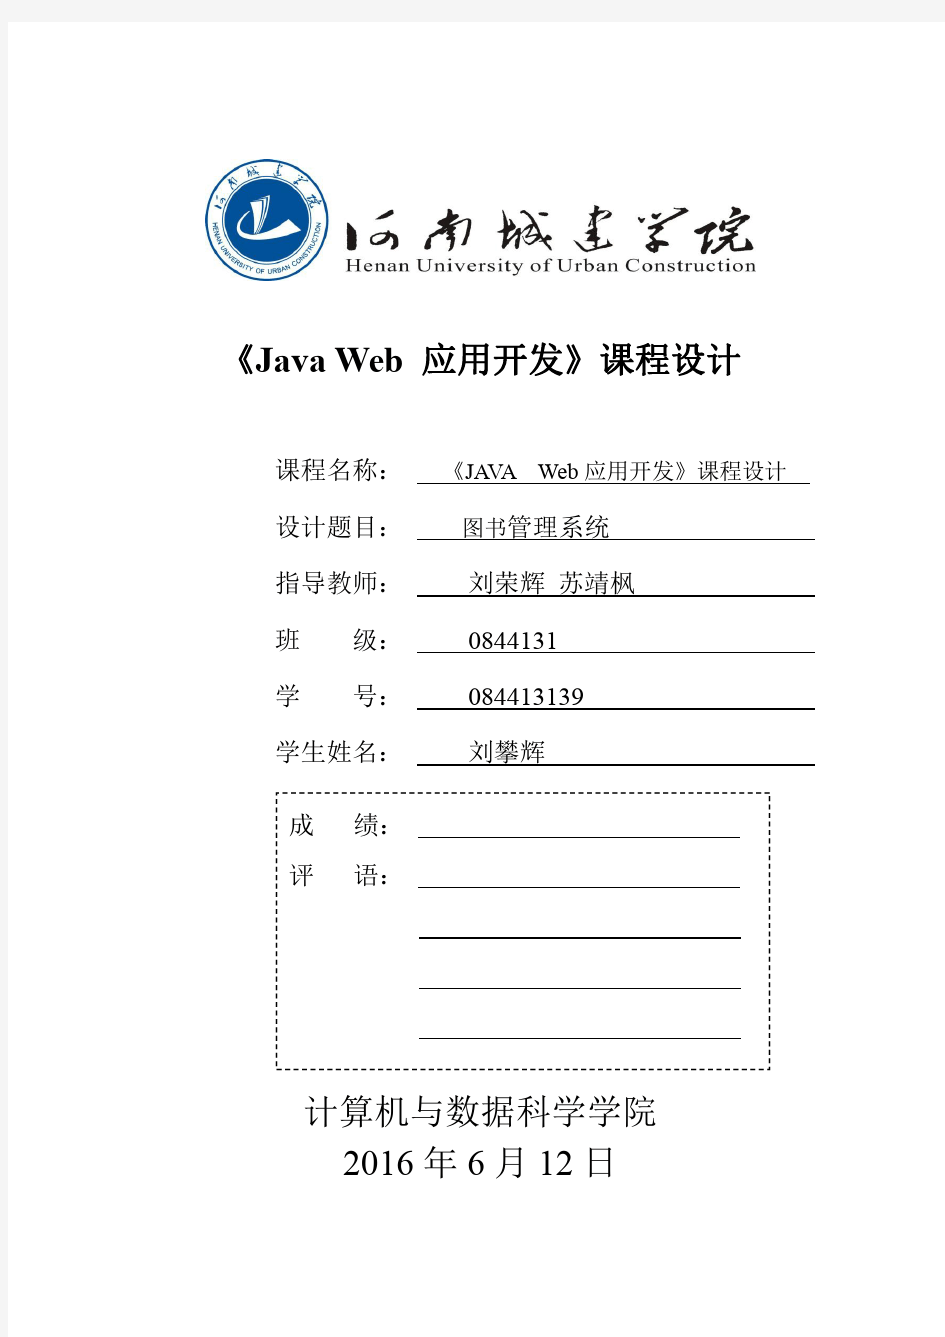 javaweb 图书借阅管理系统课程设计实验报告